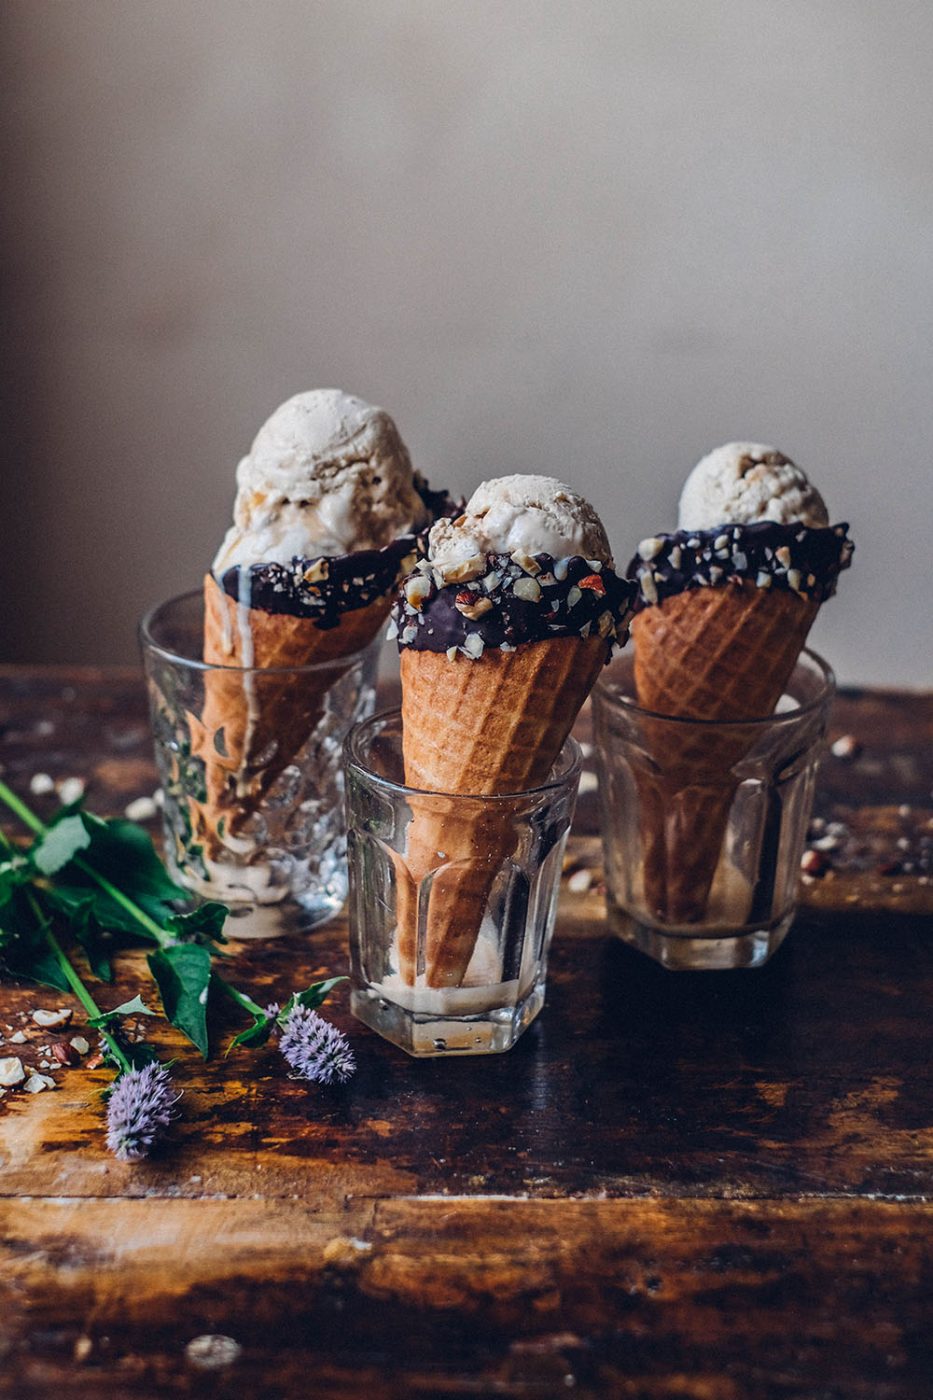 Image for Hazelnut Coffee Caramel Ice Cream & Homemade Gluten-free Chocolate Dipped Ice Cream Cones